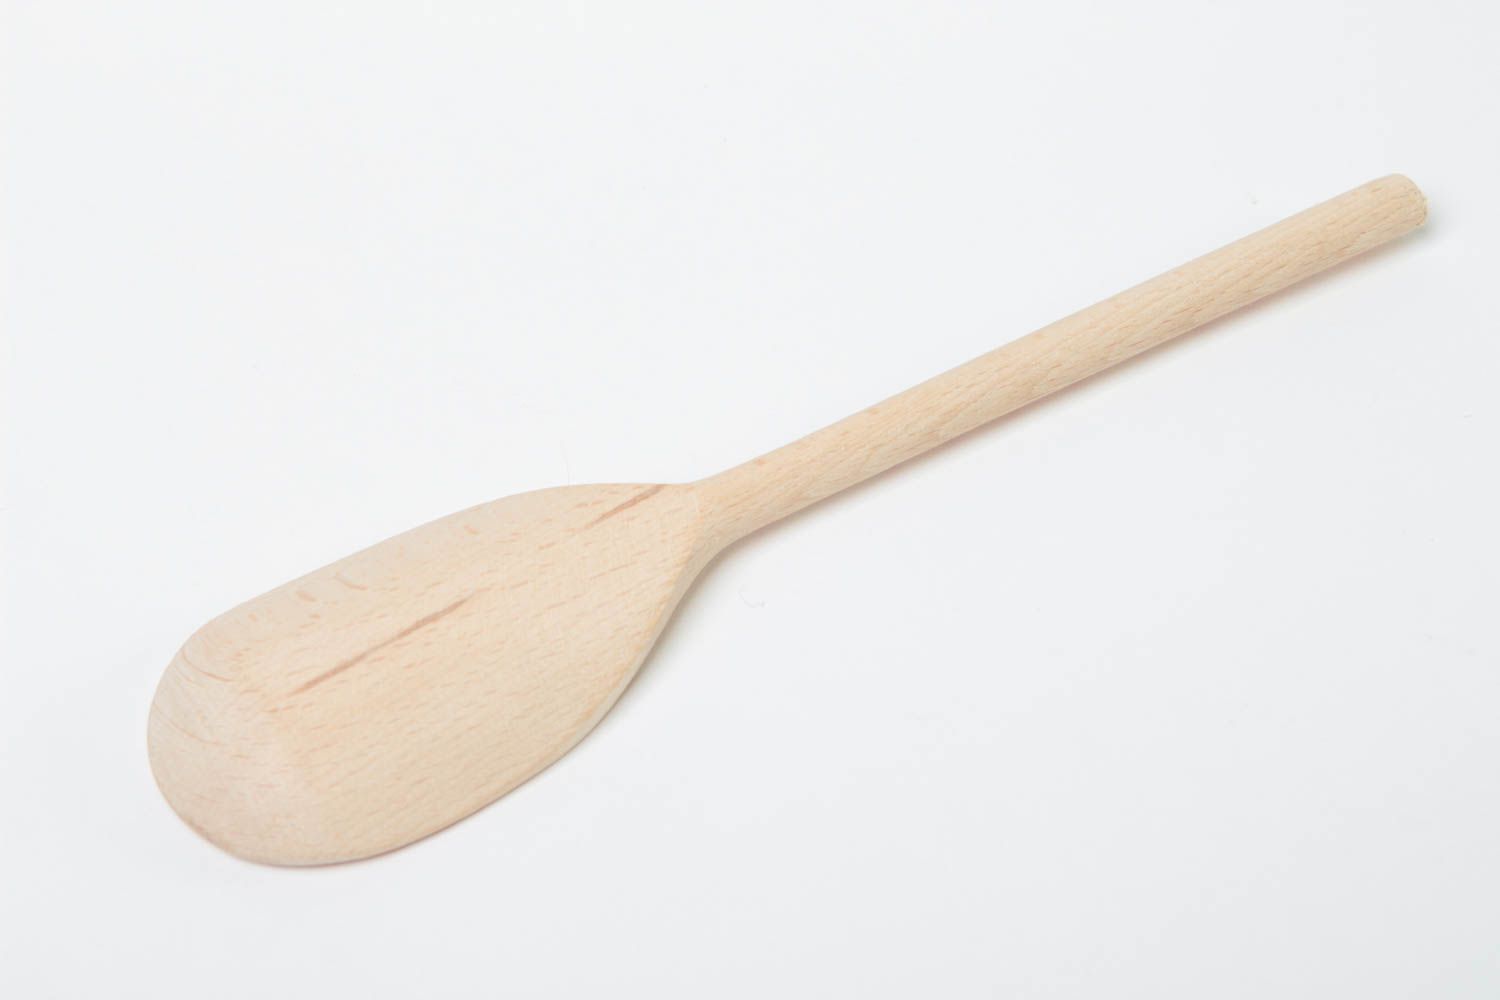 Handmade spoon wooden cutlery unusual gift decor ideas kitchen accessories photo 4